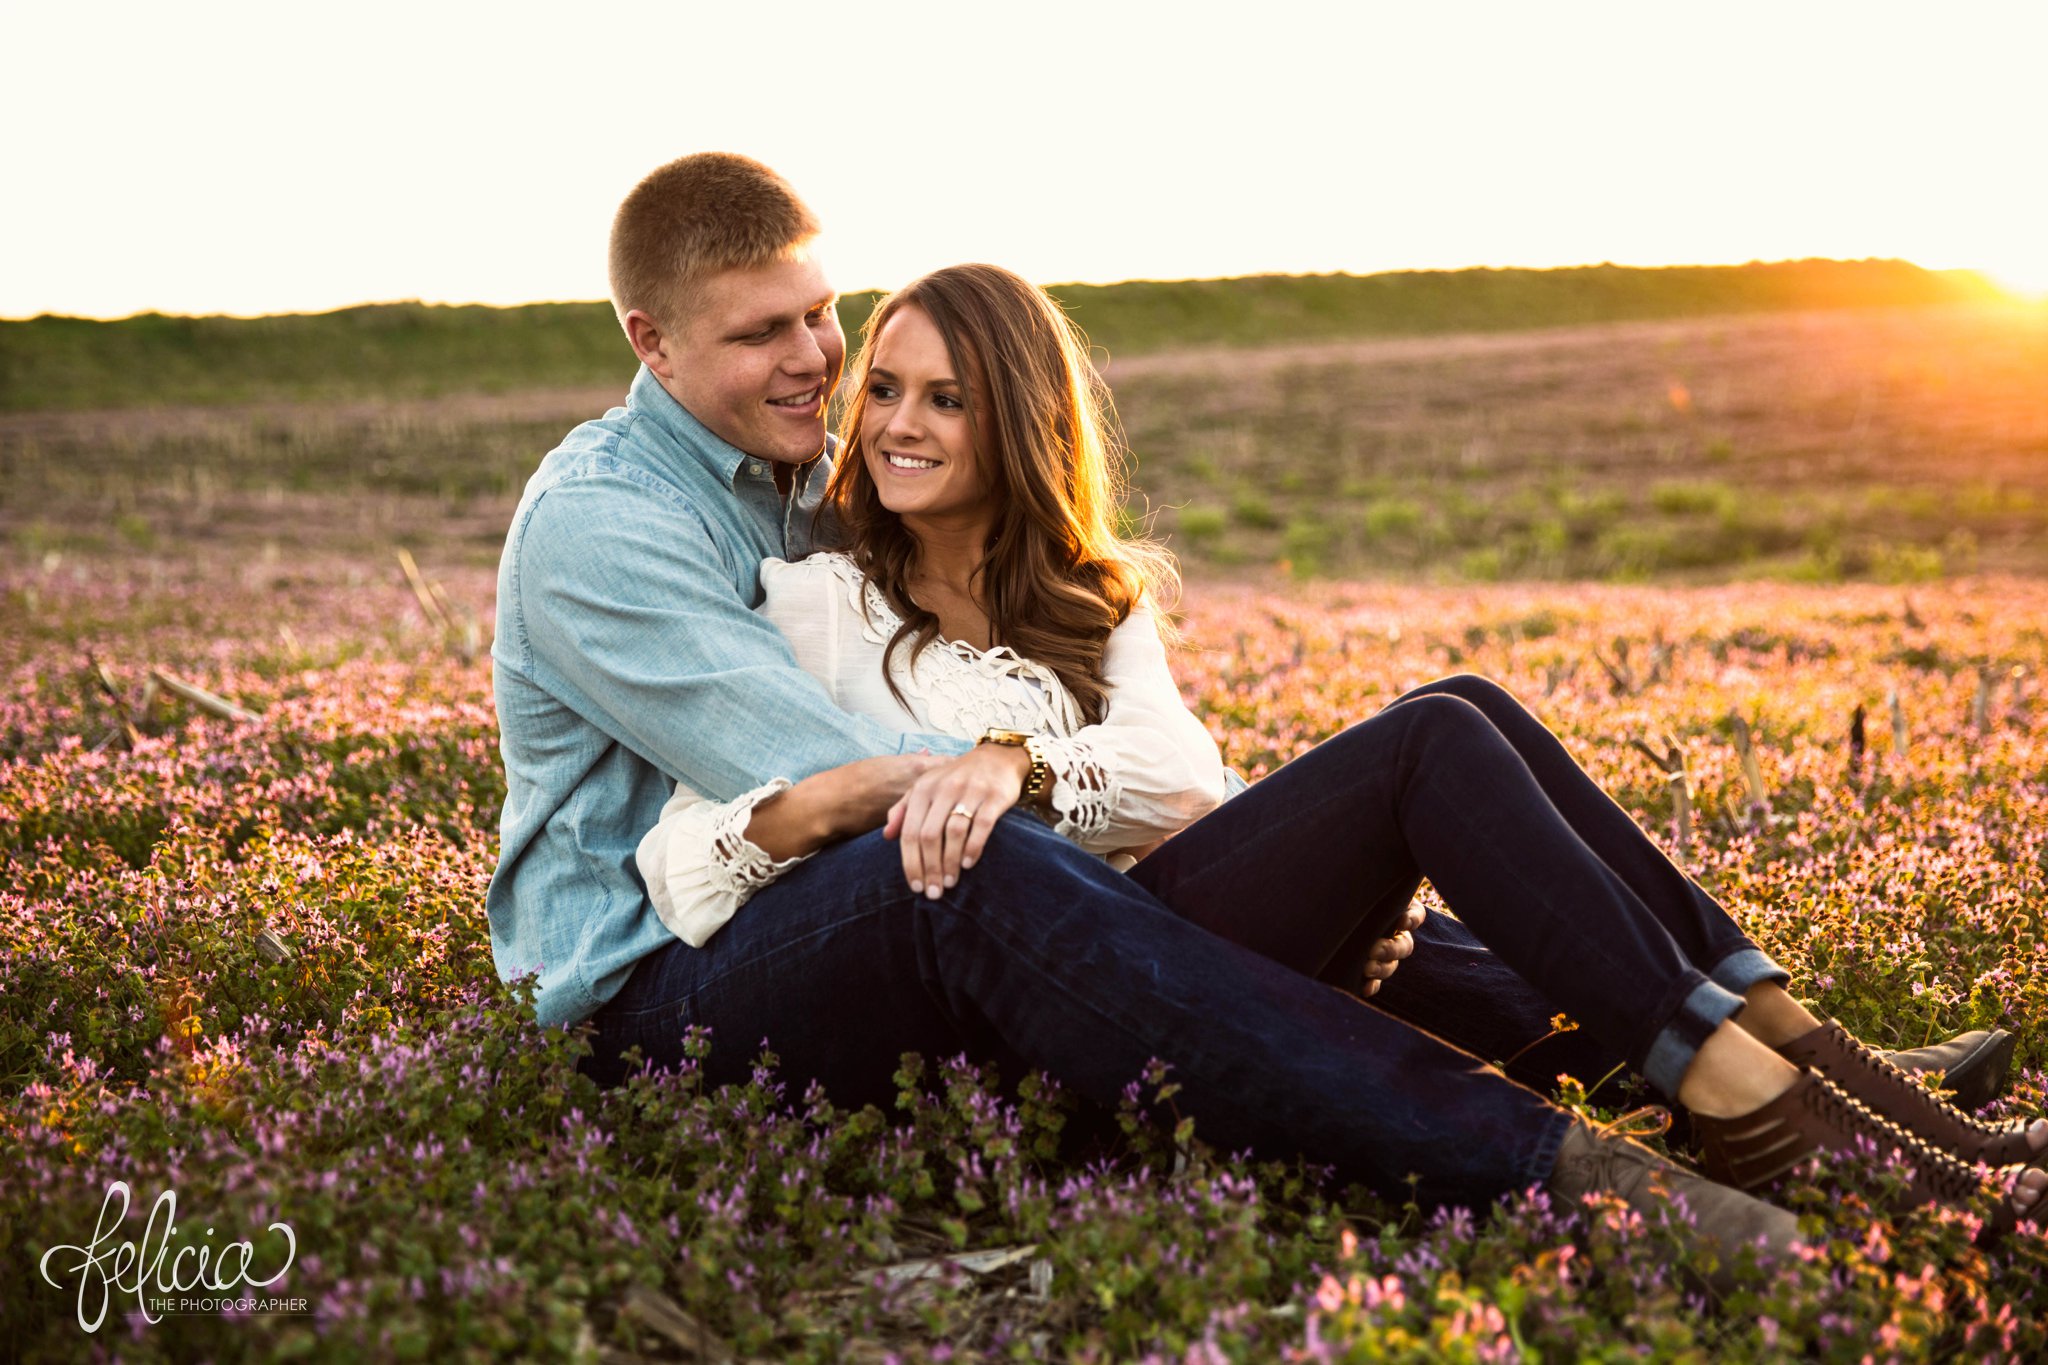 Romantic Engagement Photography | Kansas City, MO | Sunset Field | Images by www.feliciathephotographer.com